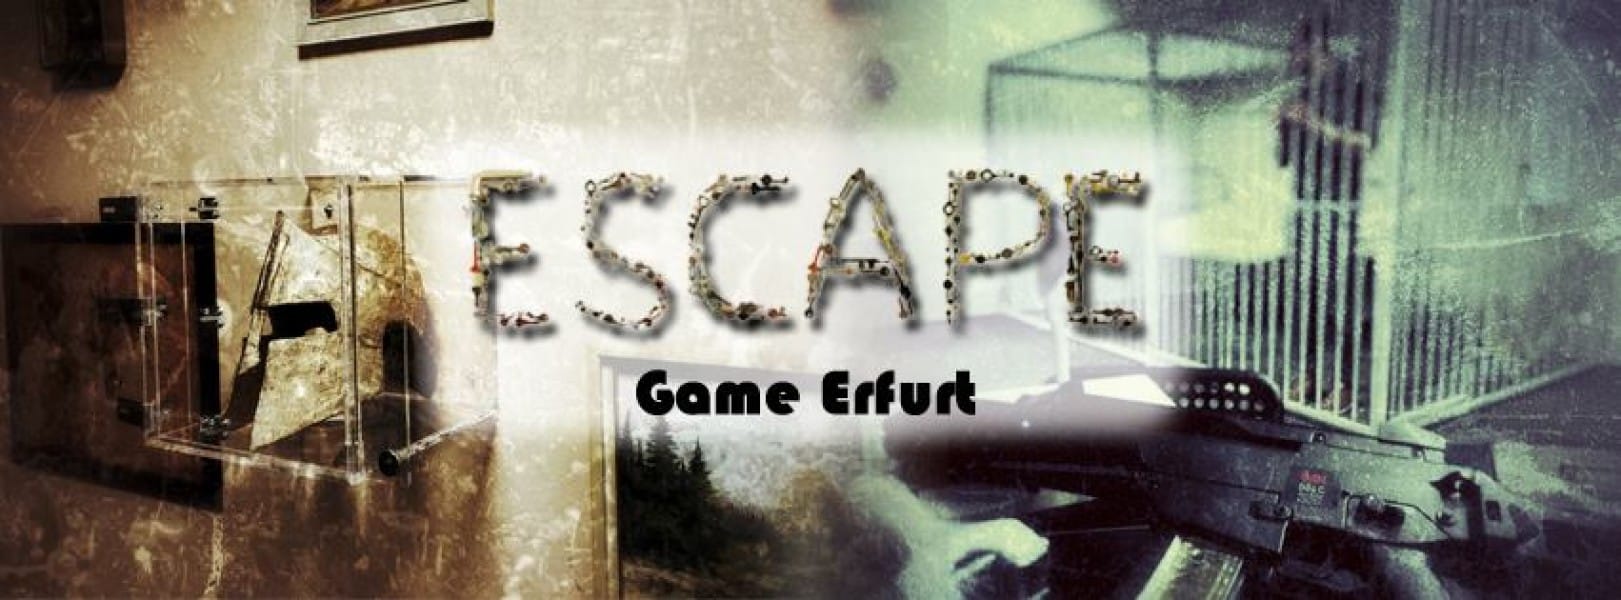 escape game erfurt titelbild